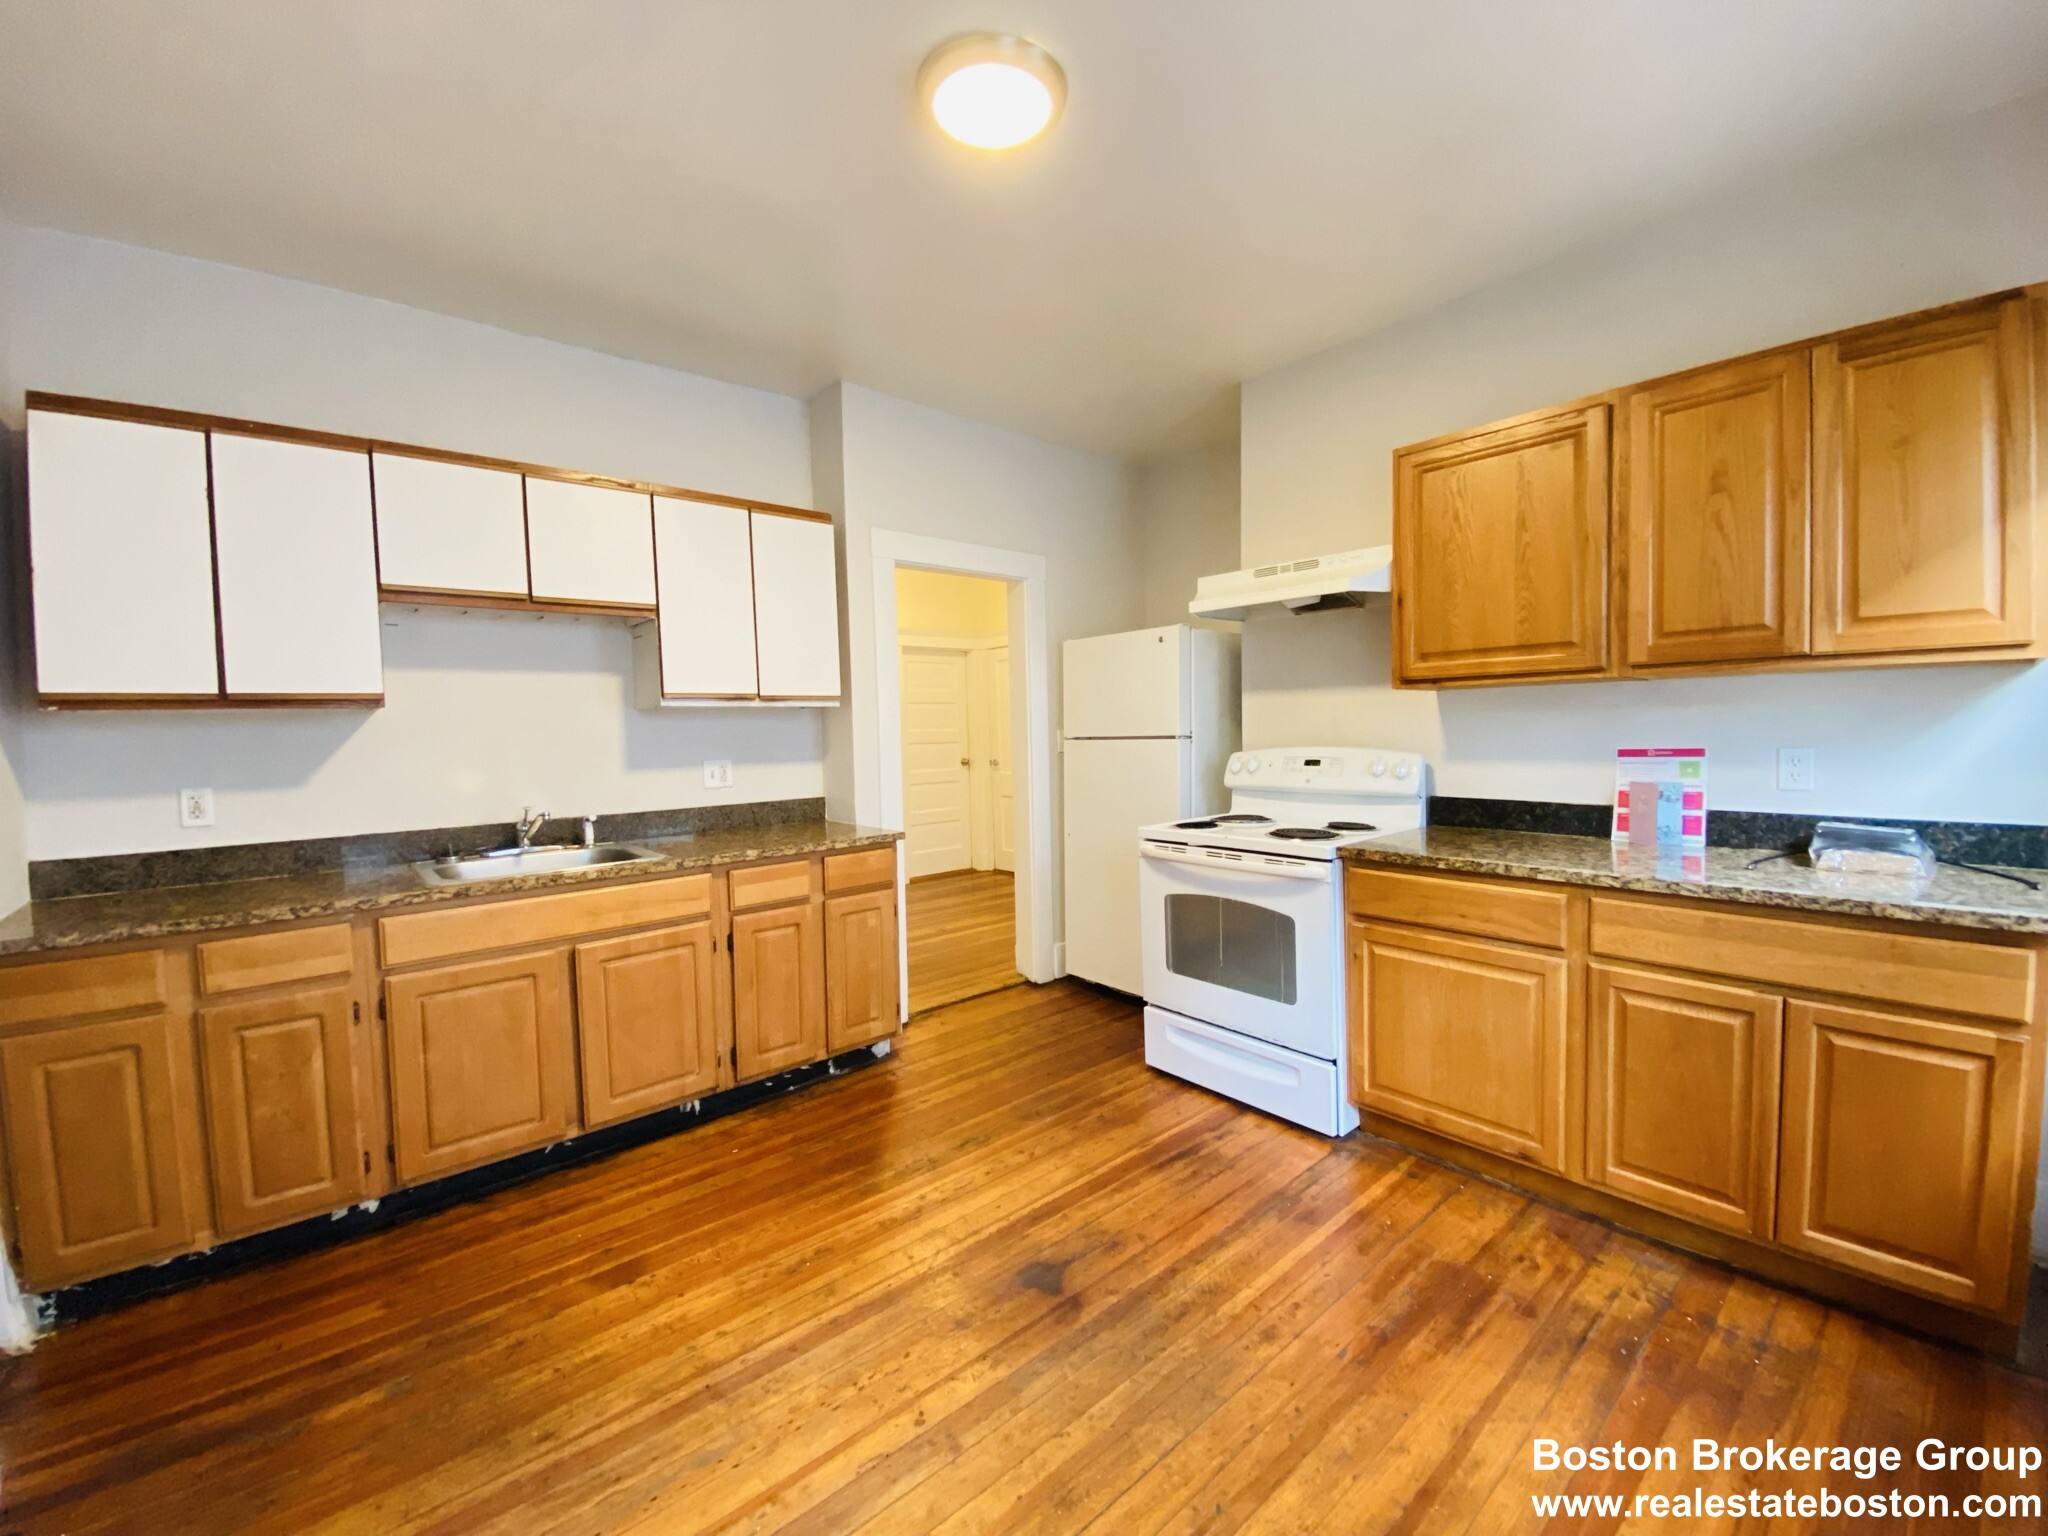 Photos of apartment on Sudan St.,Boston MA 02125